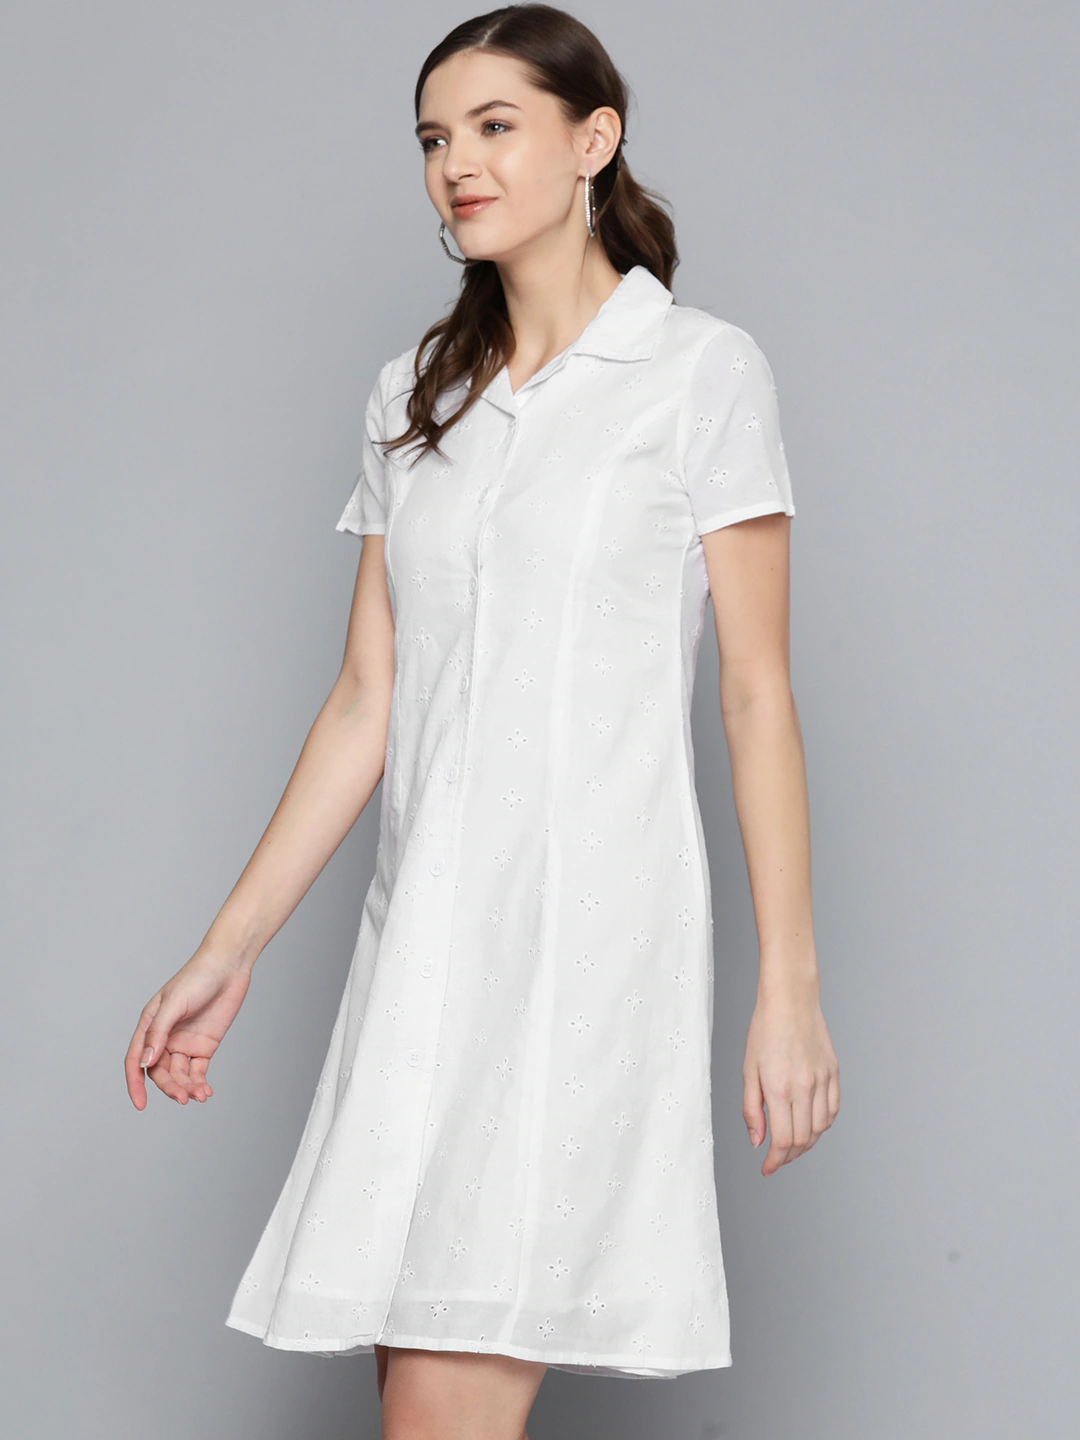 White Schiffli Shirt Dress